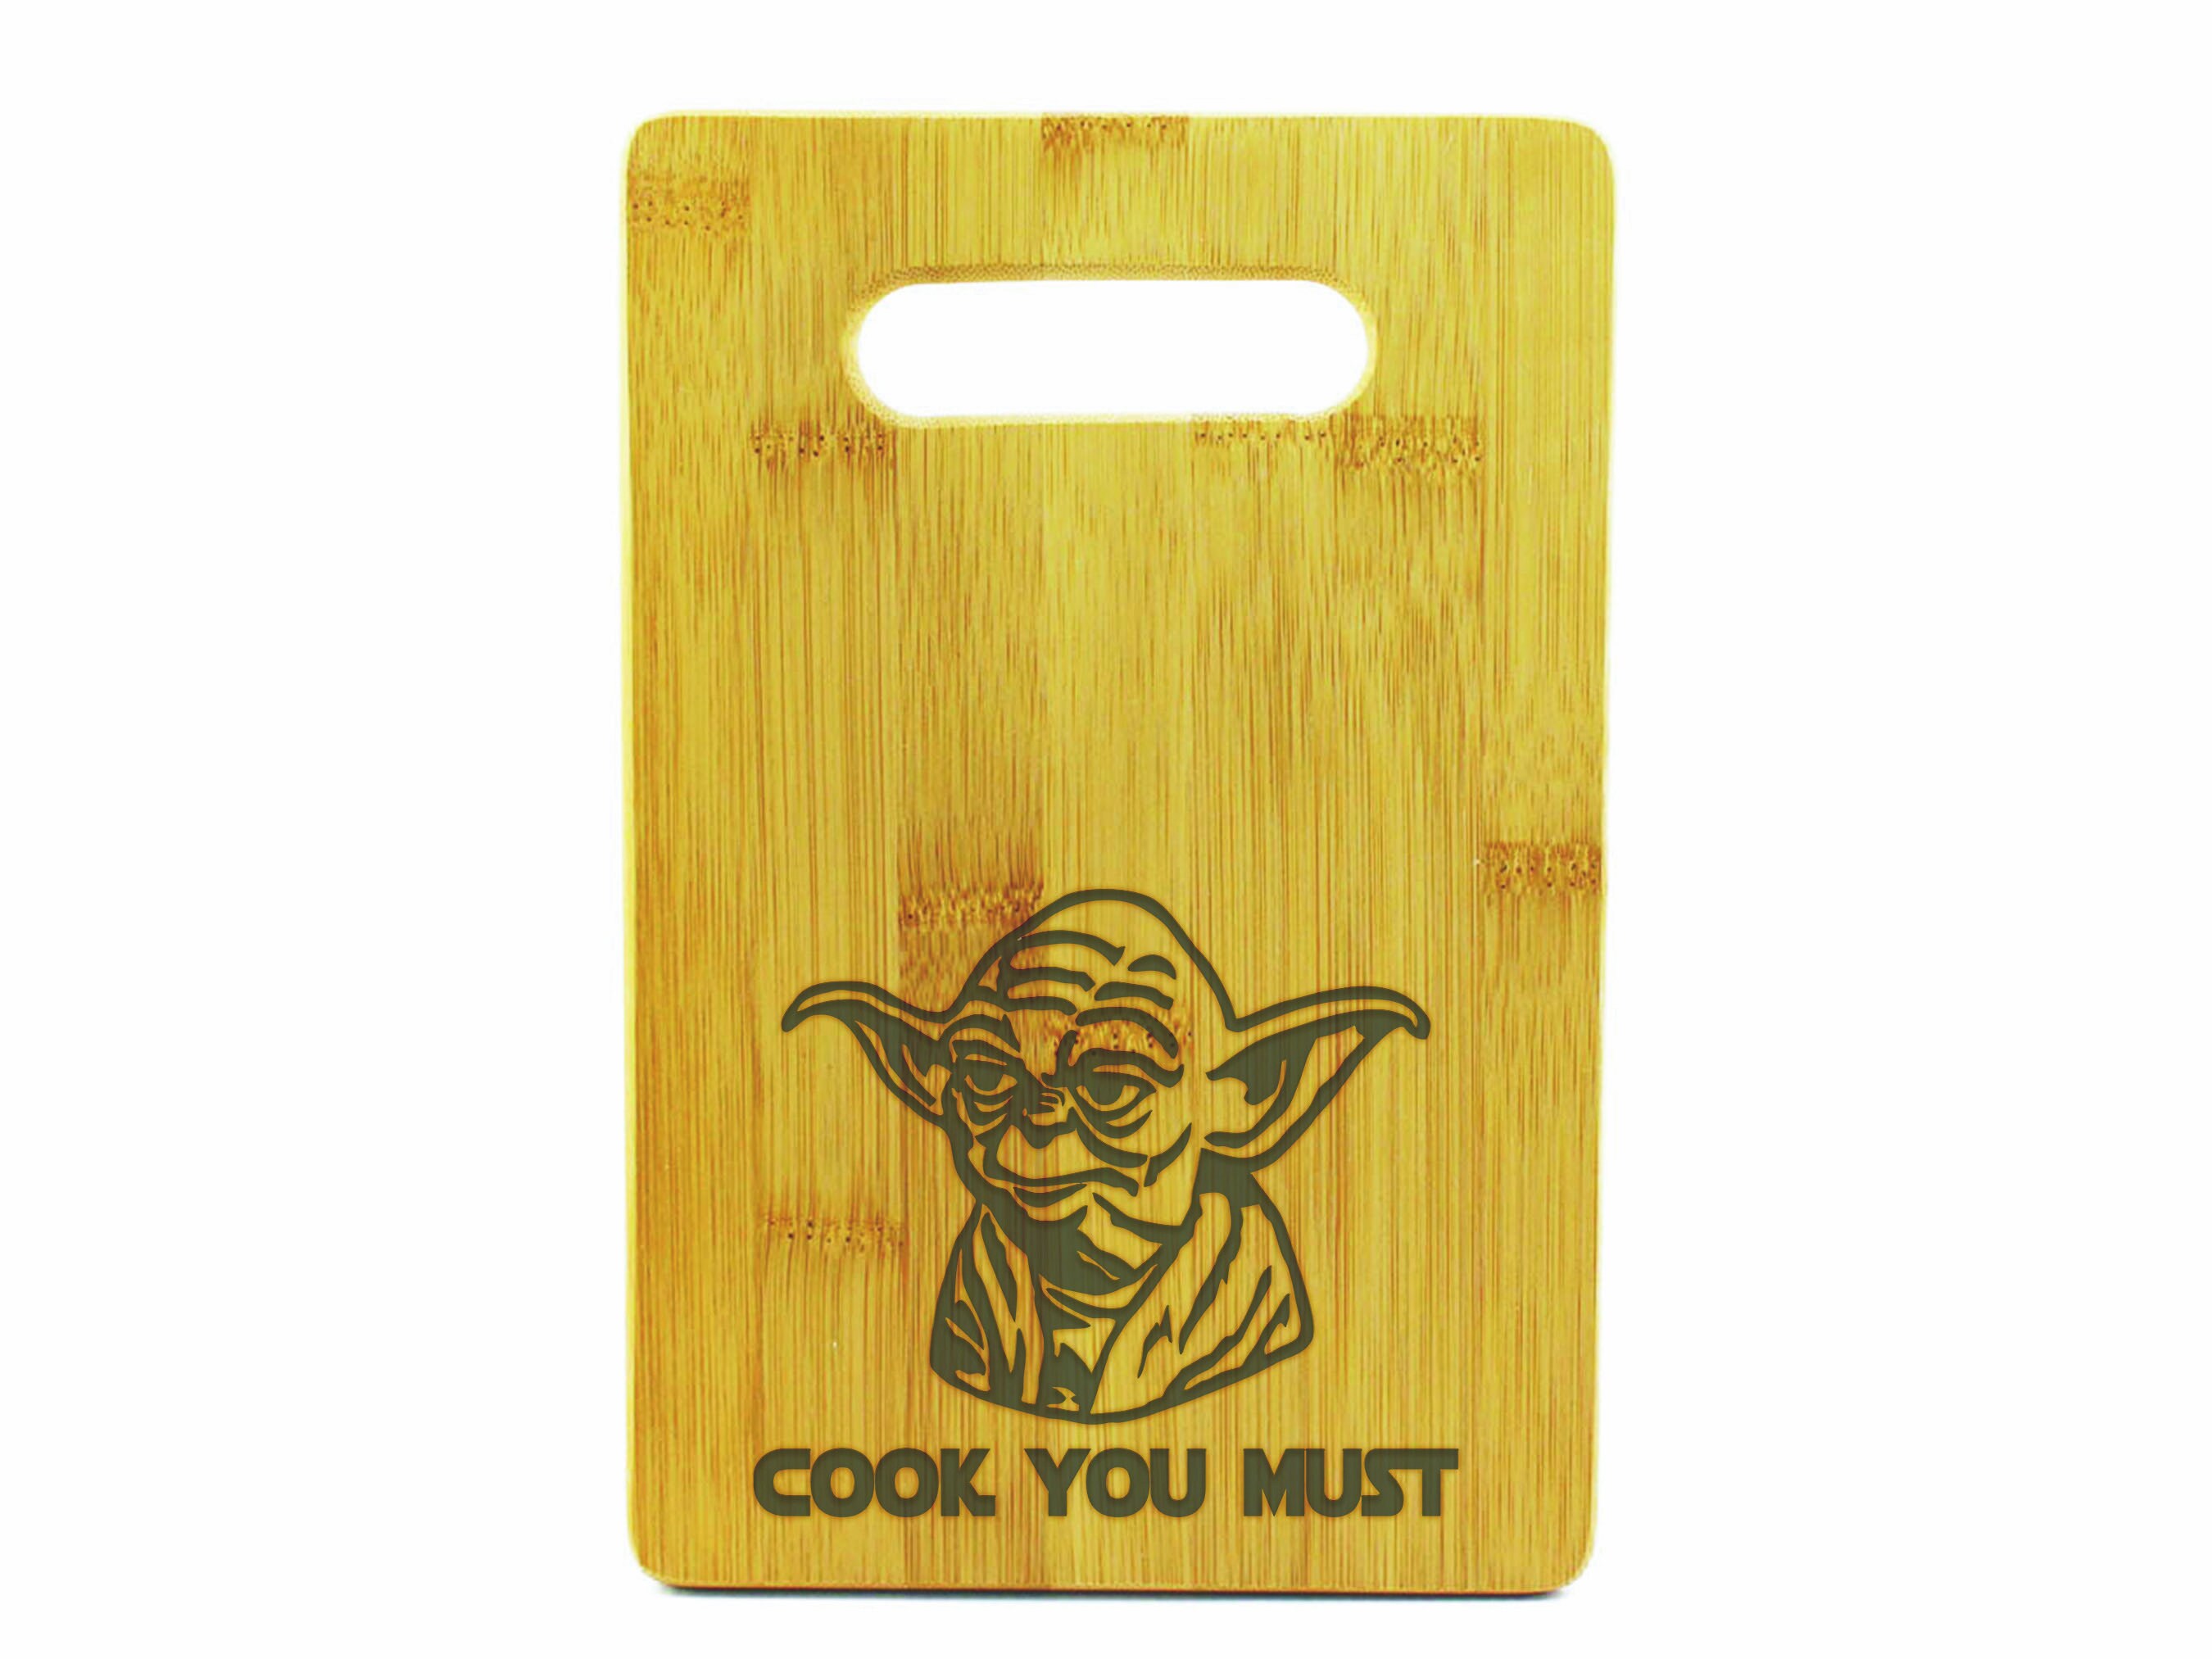 Star Wars Yoda Cook You Must Jedi Cutting Chopping Board Kitchen Decor  Housewarming Dorm Gift the Force Fan Boy Large Size 18 X 11 